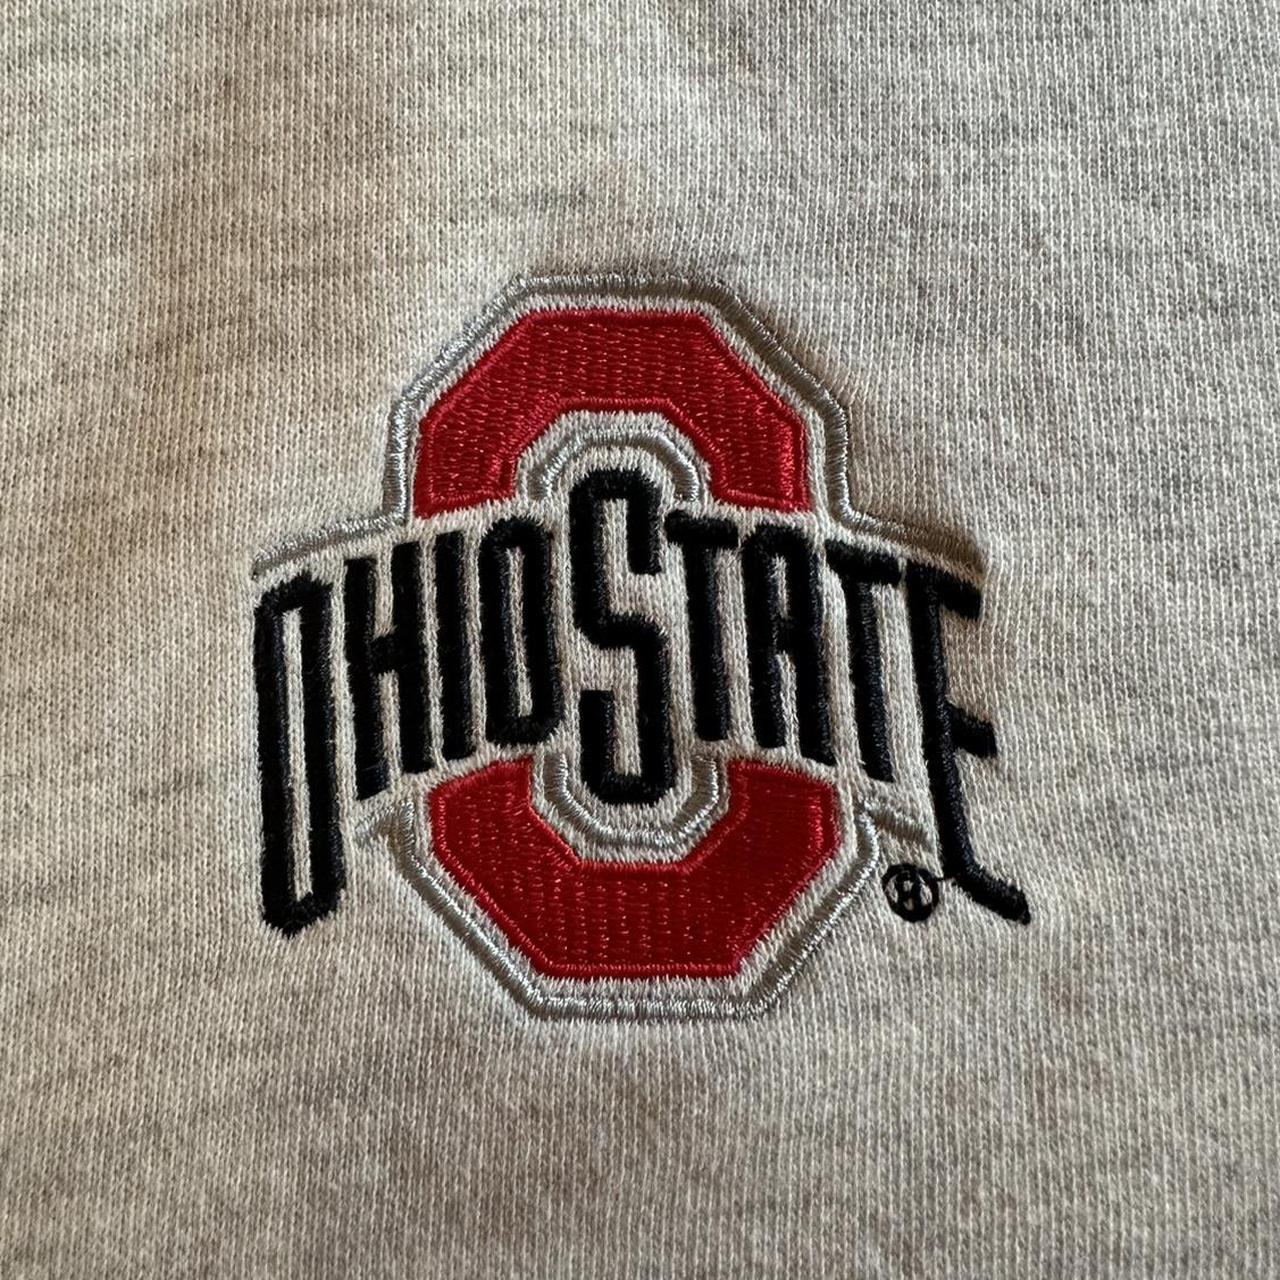 Ohio state half zip sweater - Depop